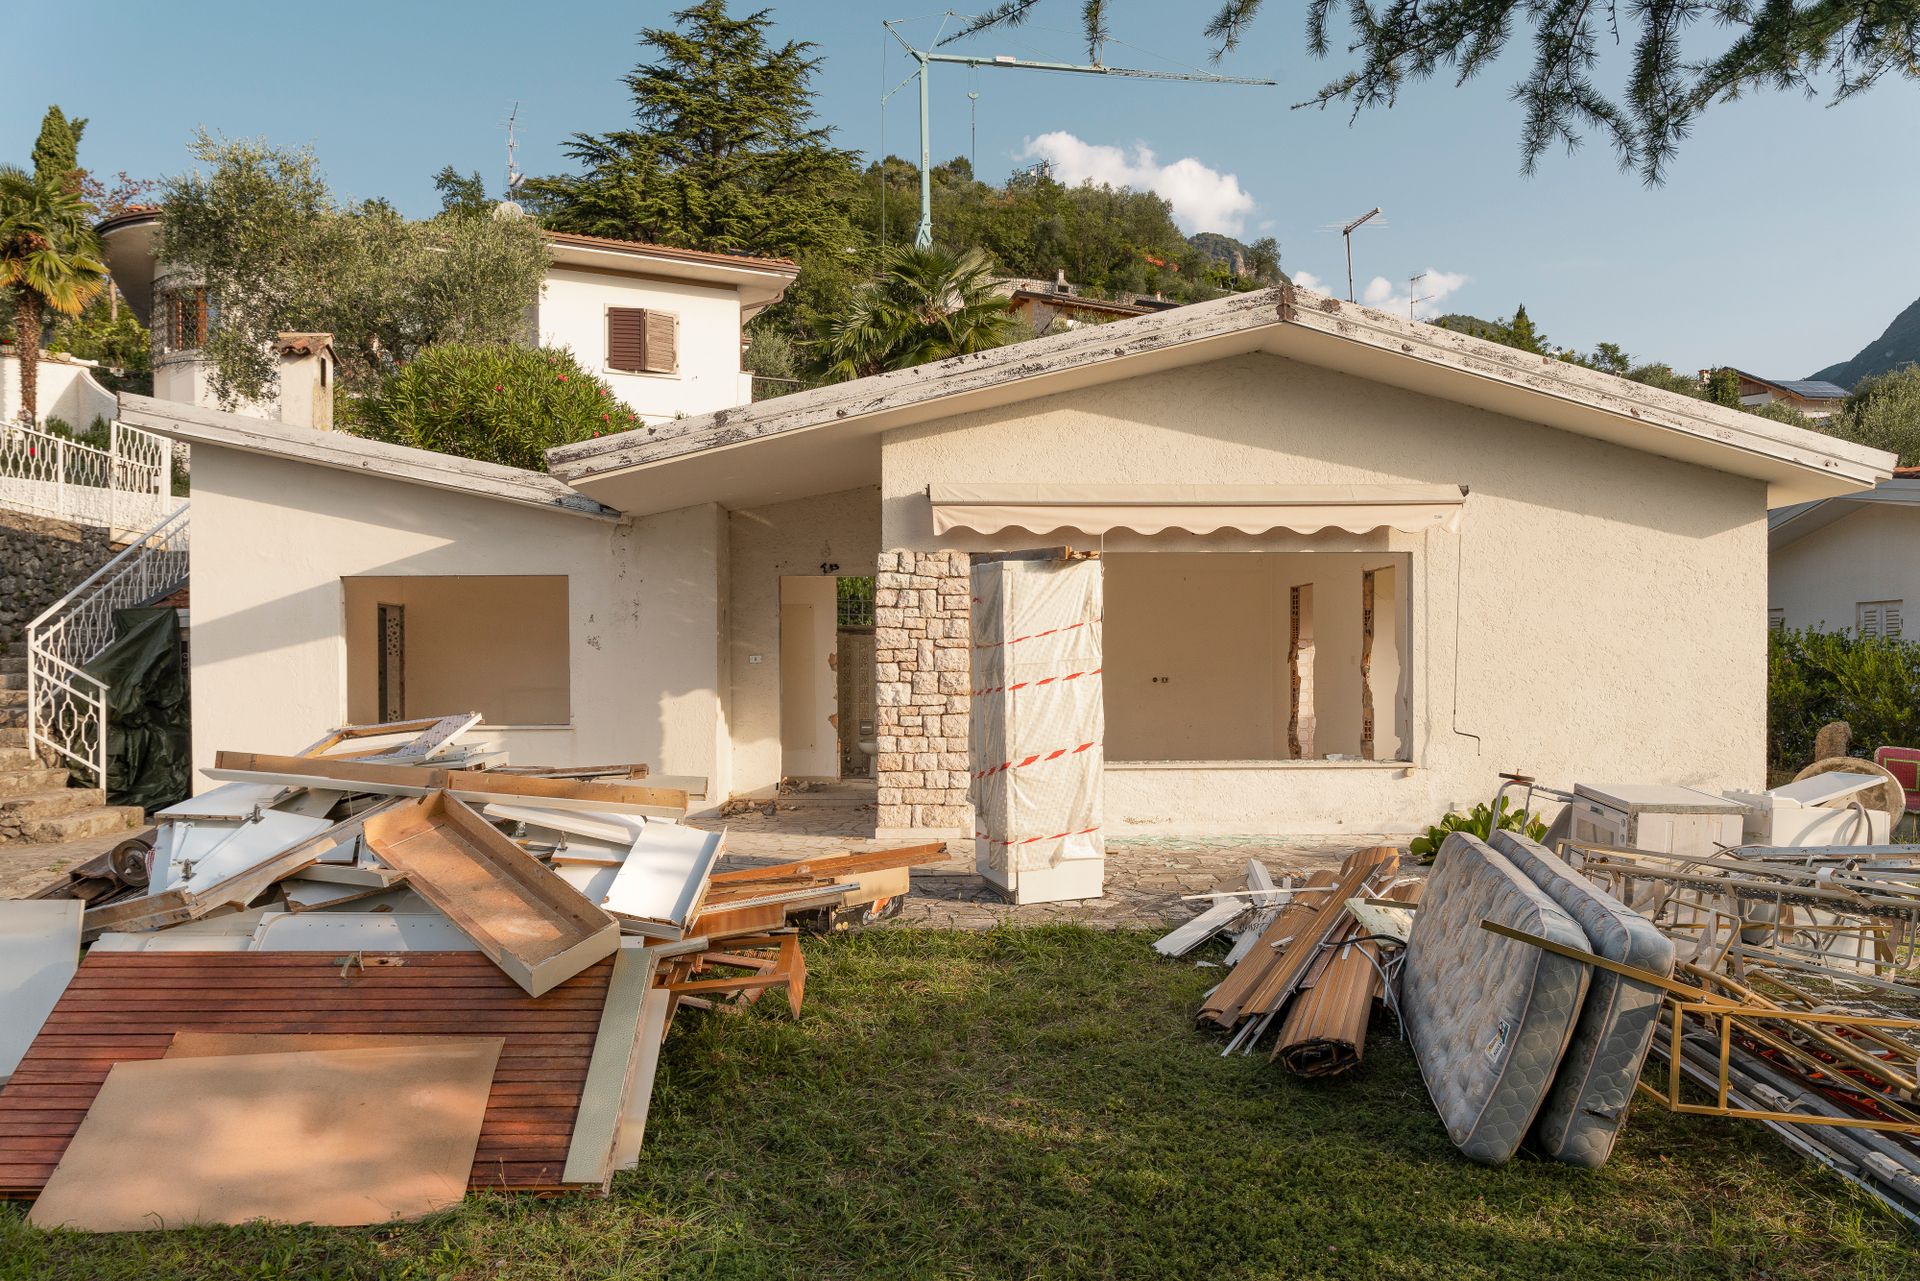 Reportage by Luca Argenton construction site strip out, house demolition Lake Garda, Brescia, Bergamo, Milan. Officina Magisafi architecture design - photo 1